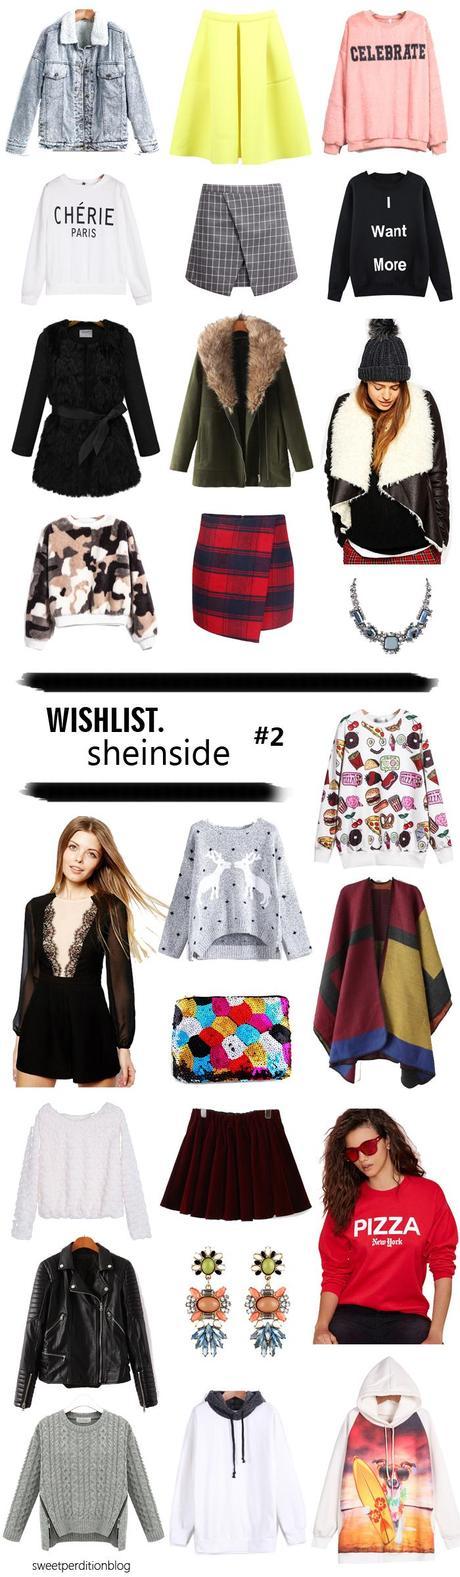 Wishlist | Sheinside #2